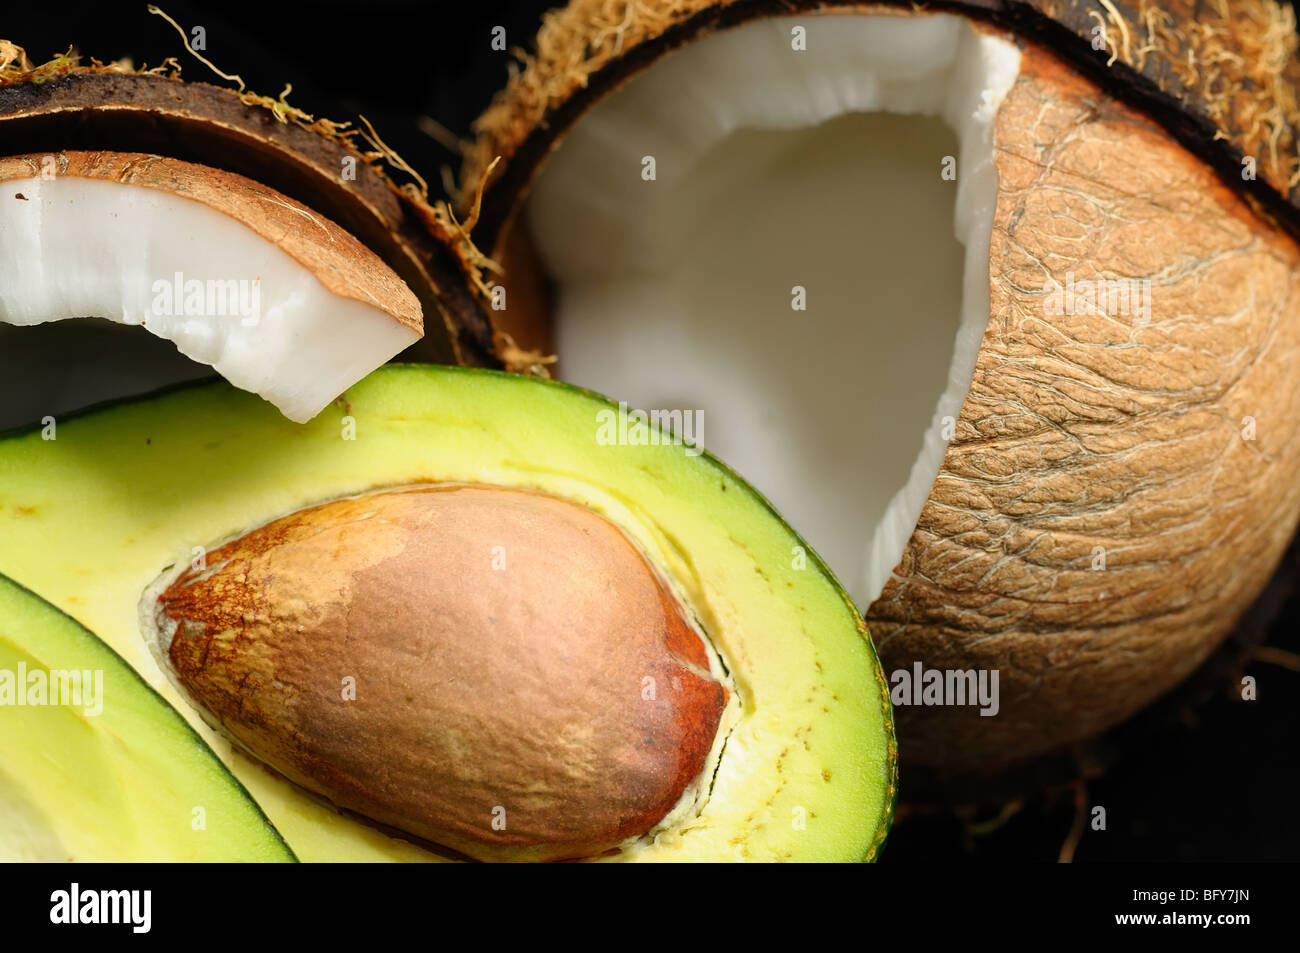 tropical fruits. avocado and coconut Stock Photo